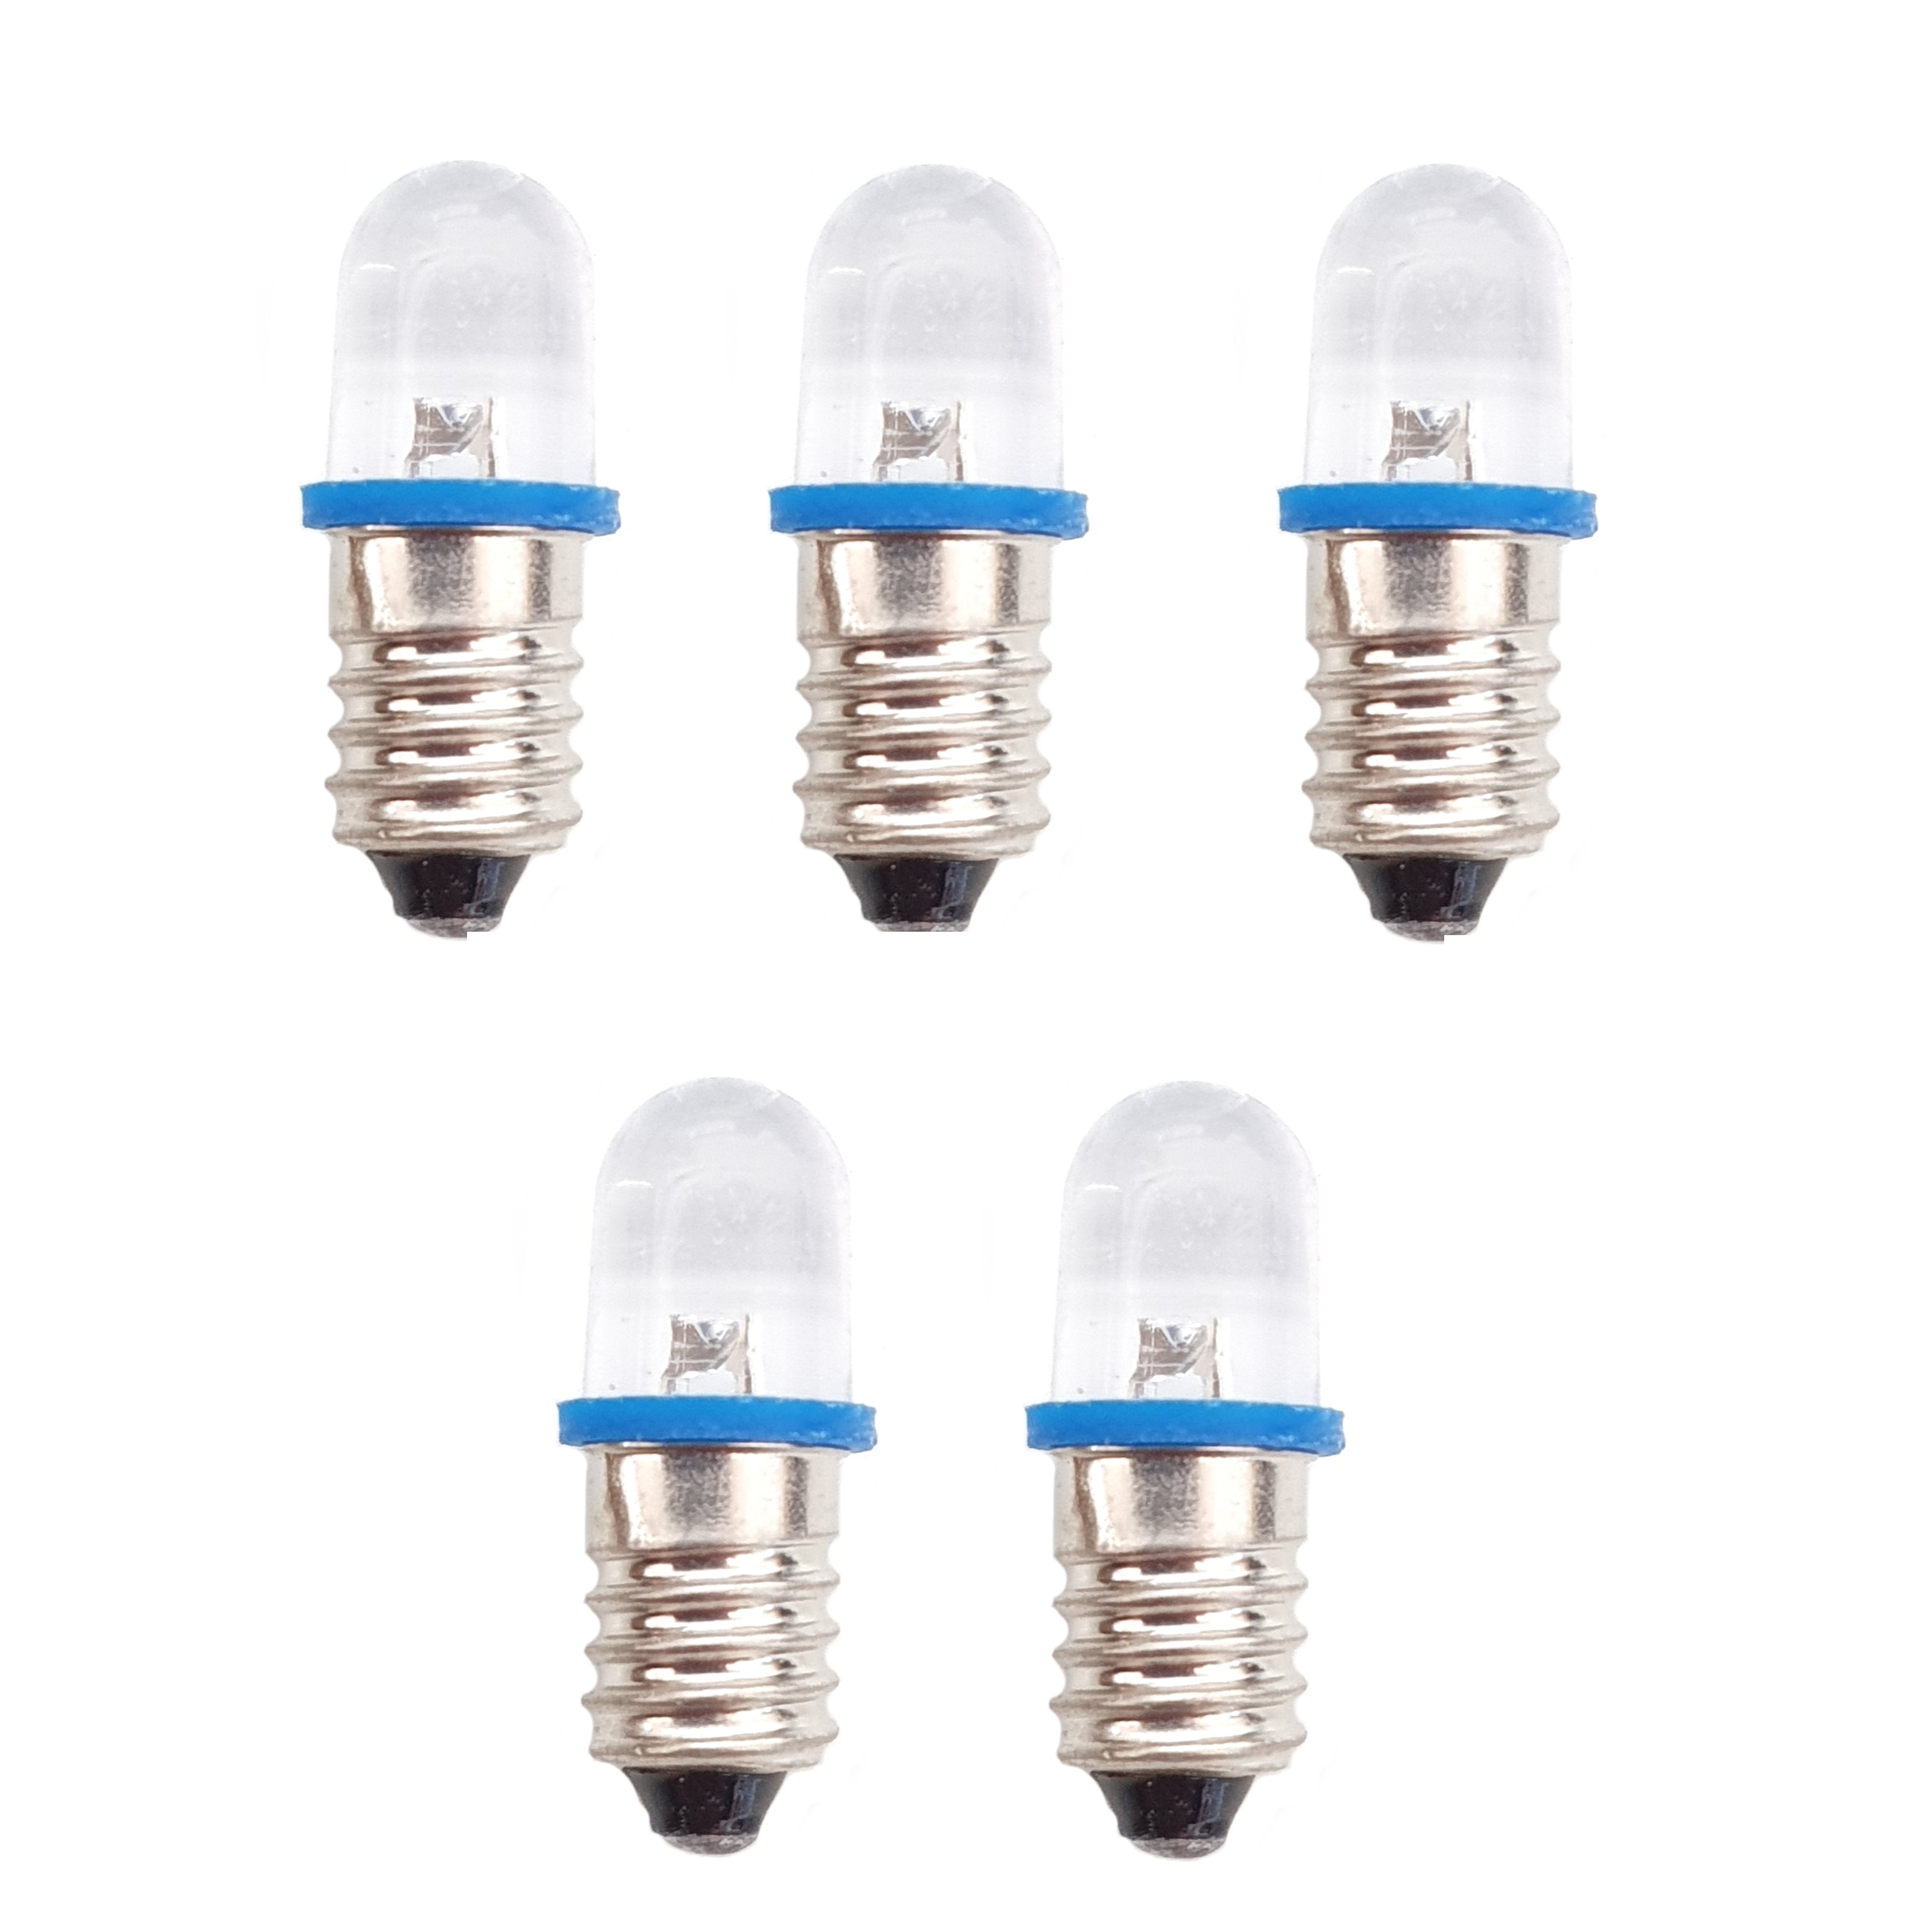 5 x 6V MES E10 LED Lamp Bulb 10mm Diameter - Blue